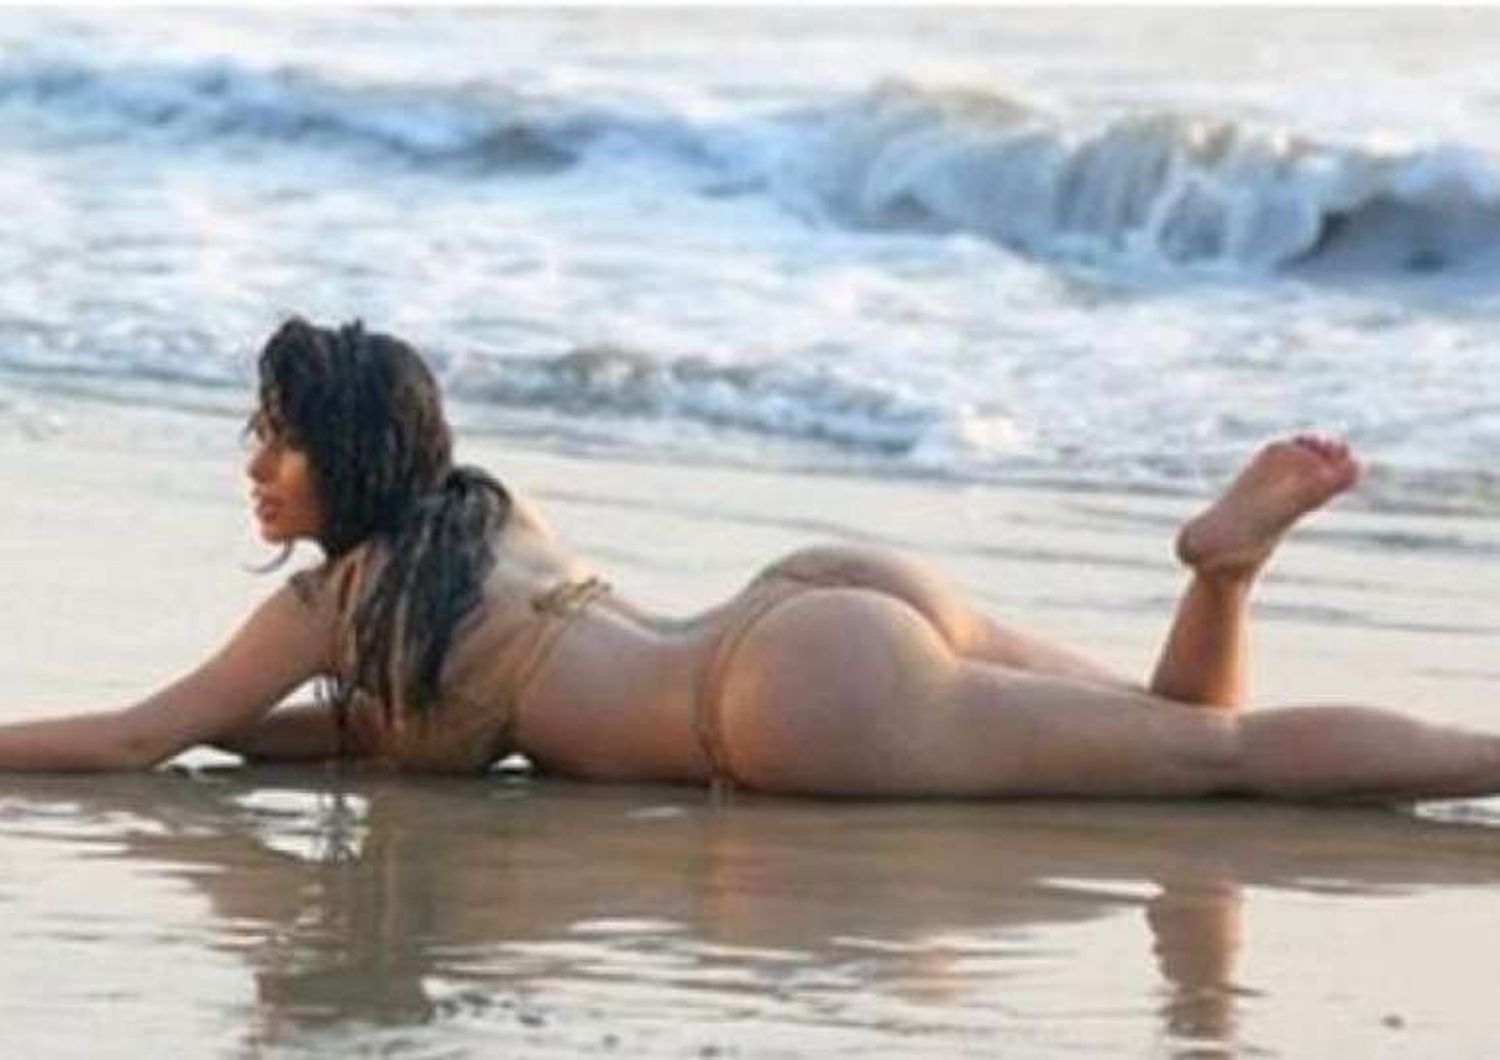 Vip: porno-hacker, in rete foto rubate di Kim Kardashian nuda